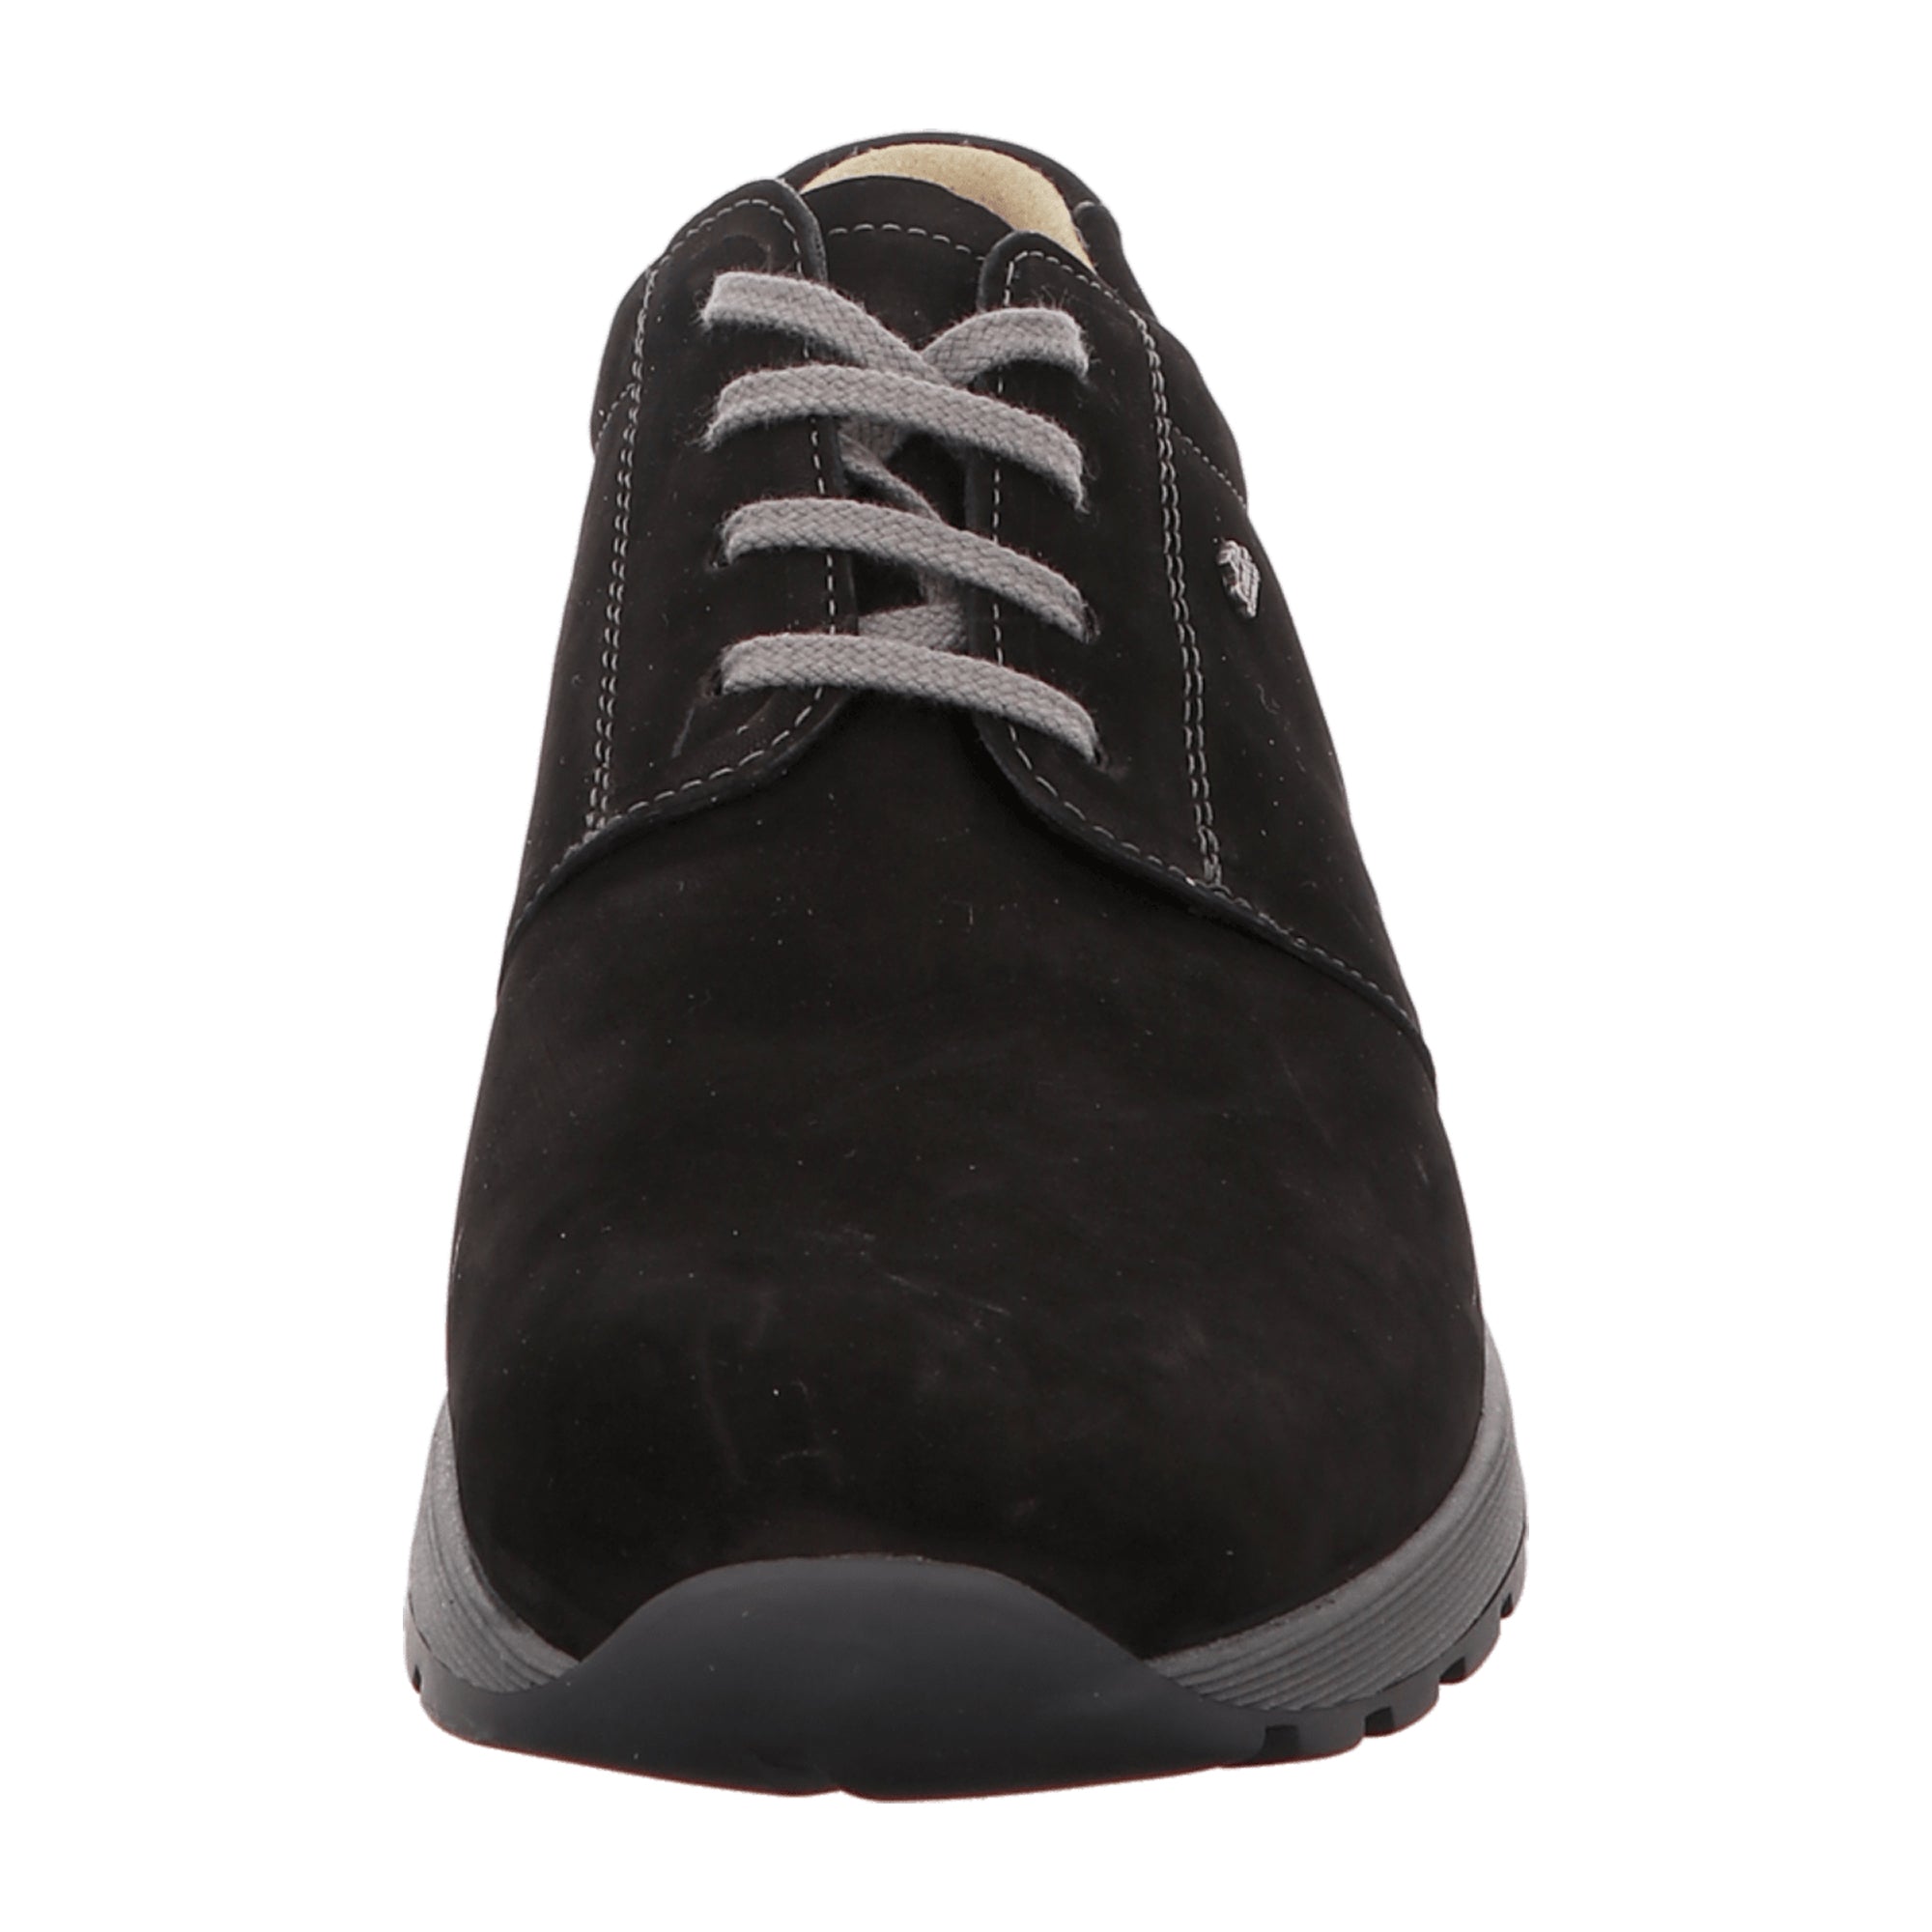 Finn Comfort Enfield Men's Black Comfort Shoes - Stylish & Durable